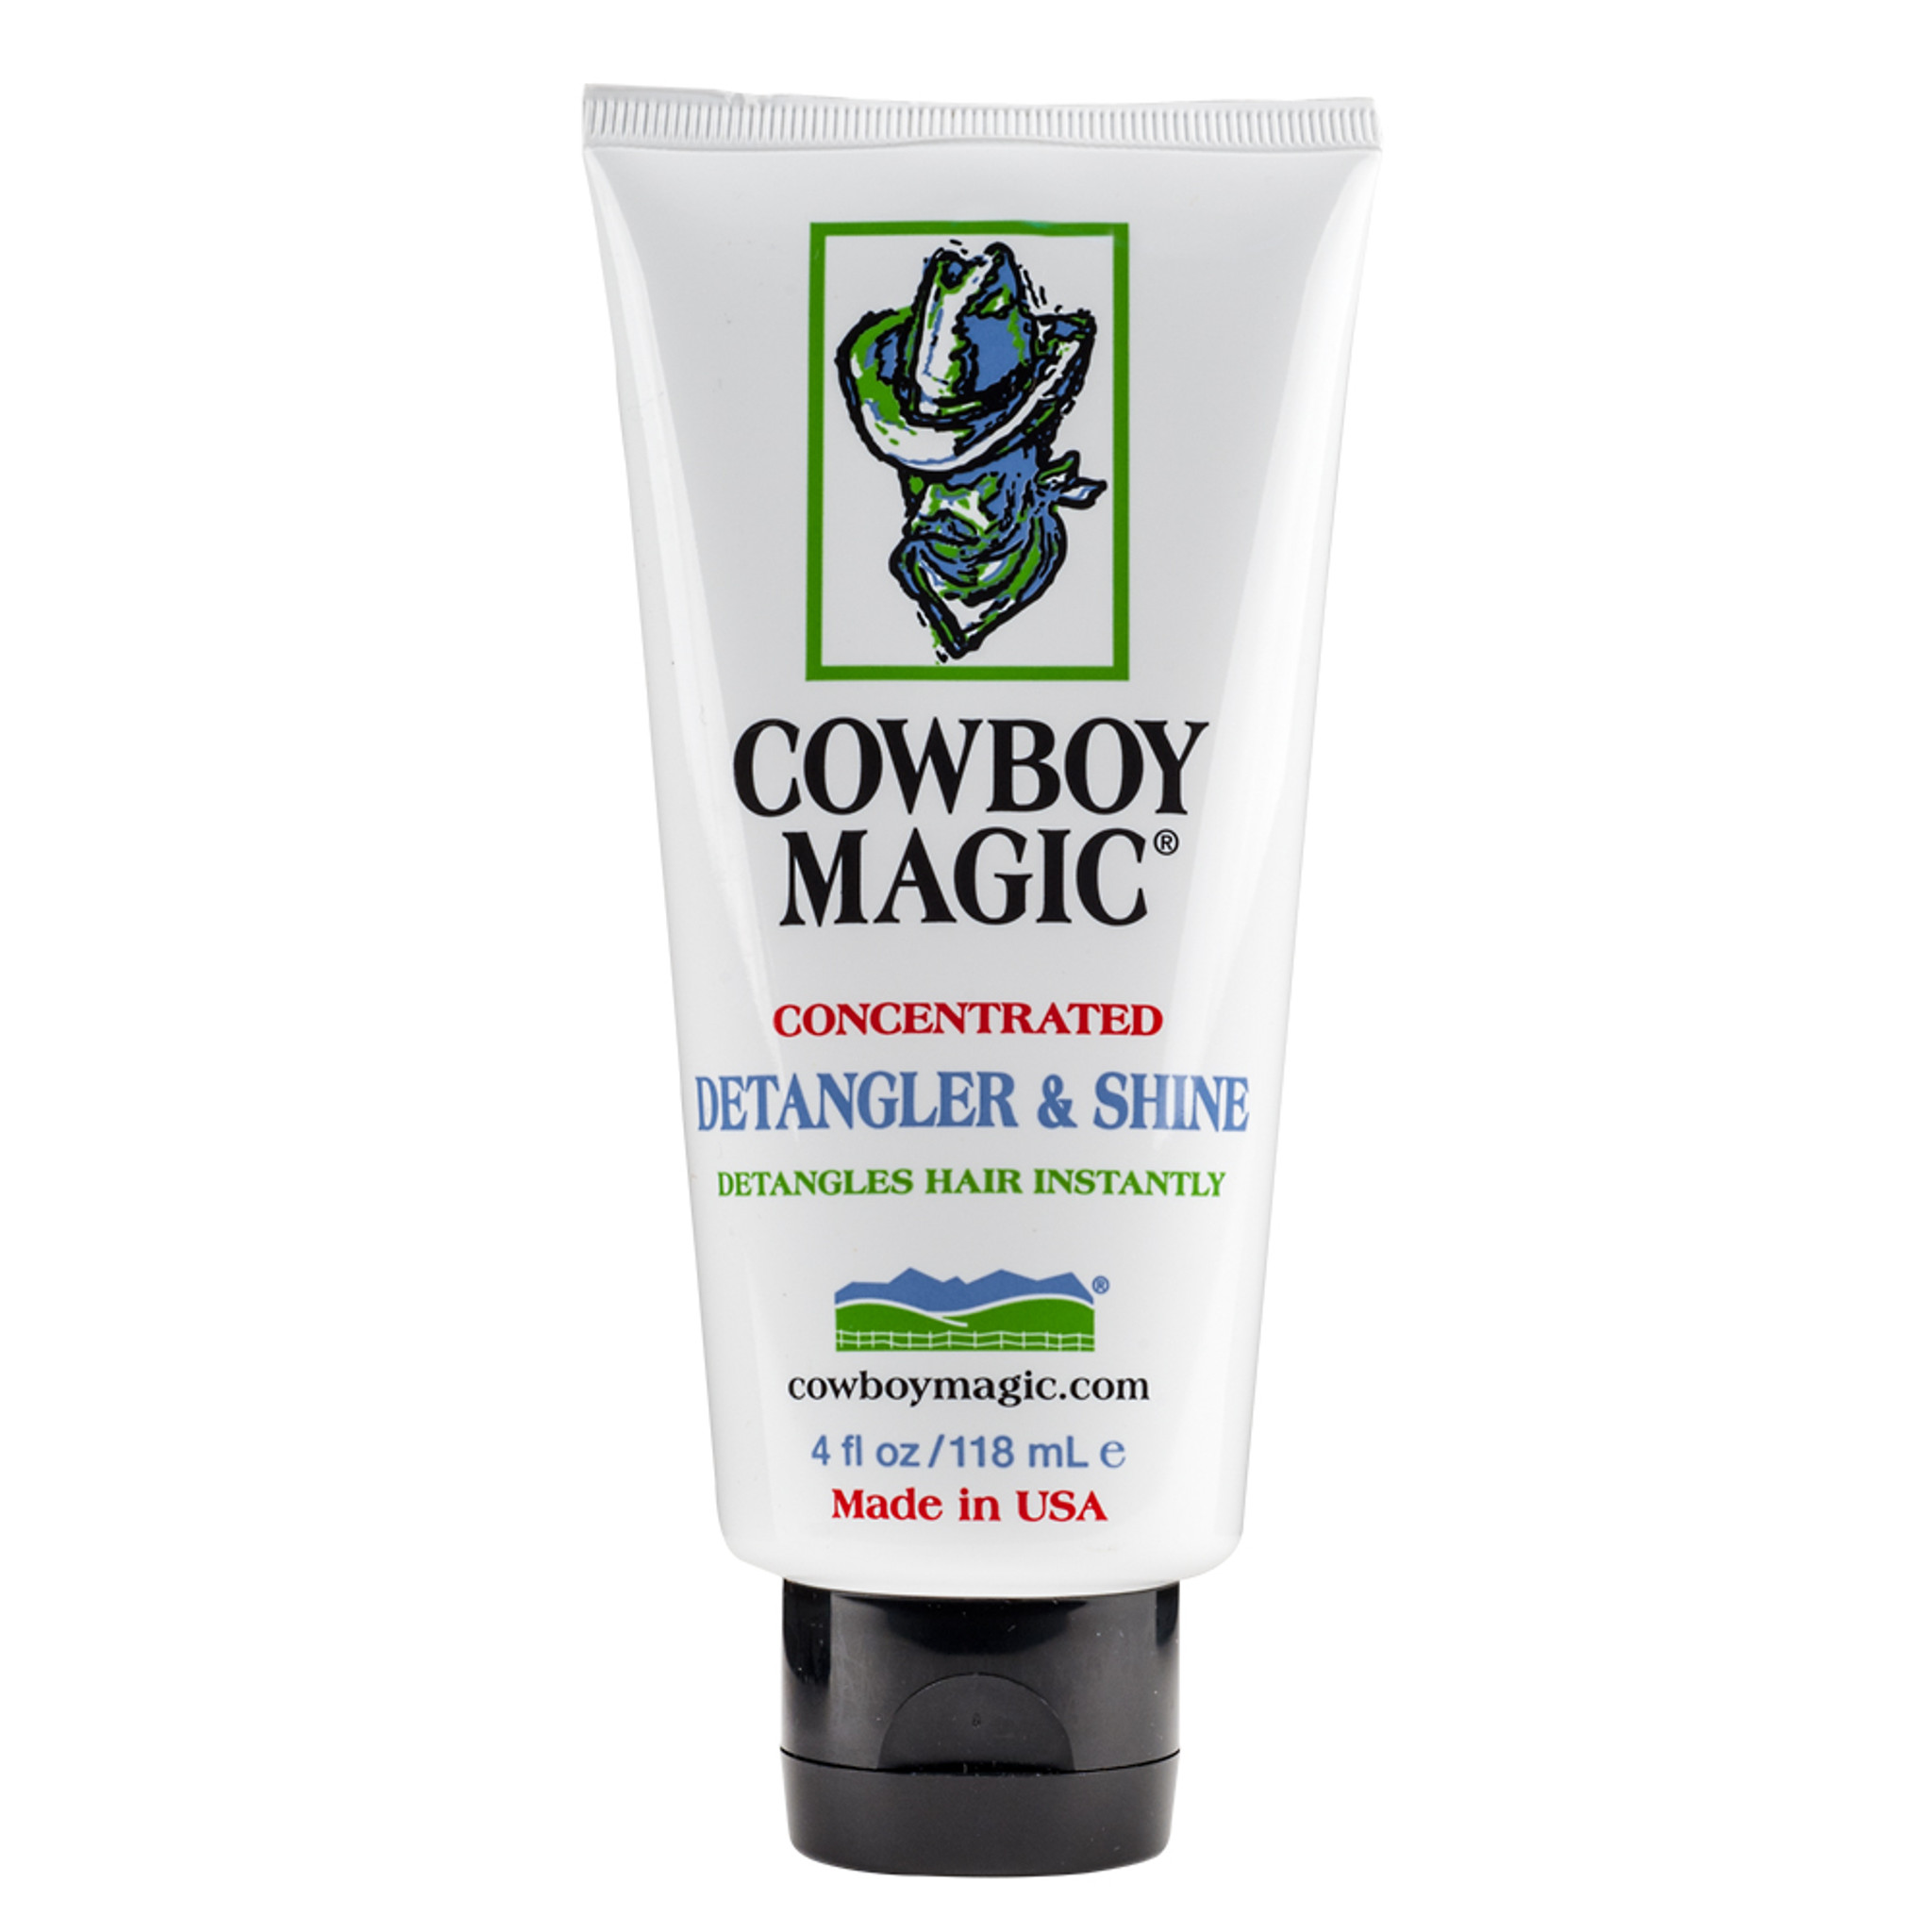 Cowboy Magic Detangler & Shine, Concentrated - 4 fl oz